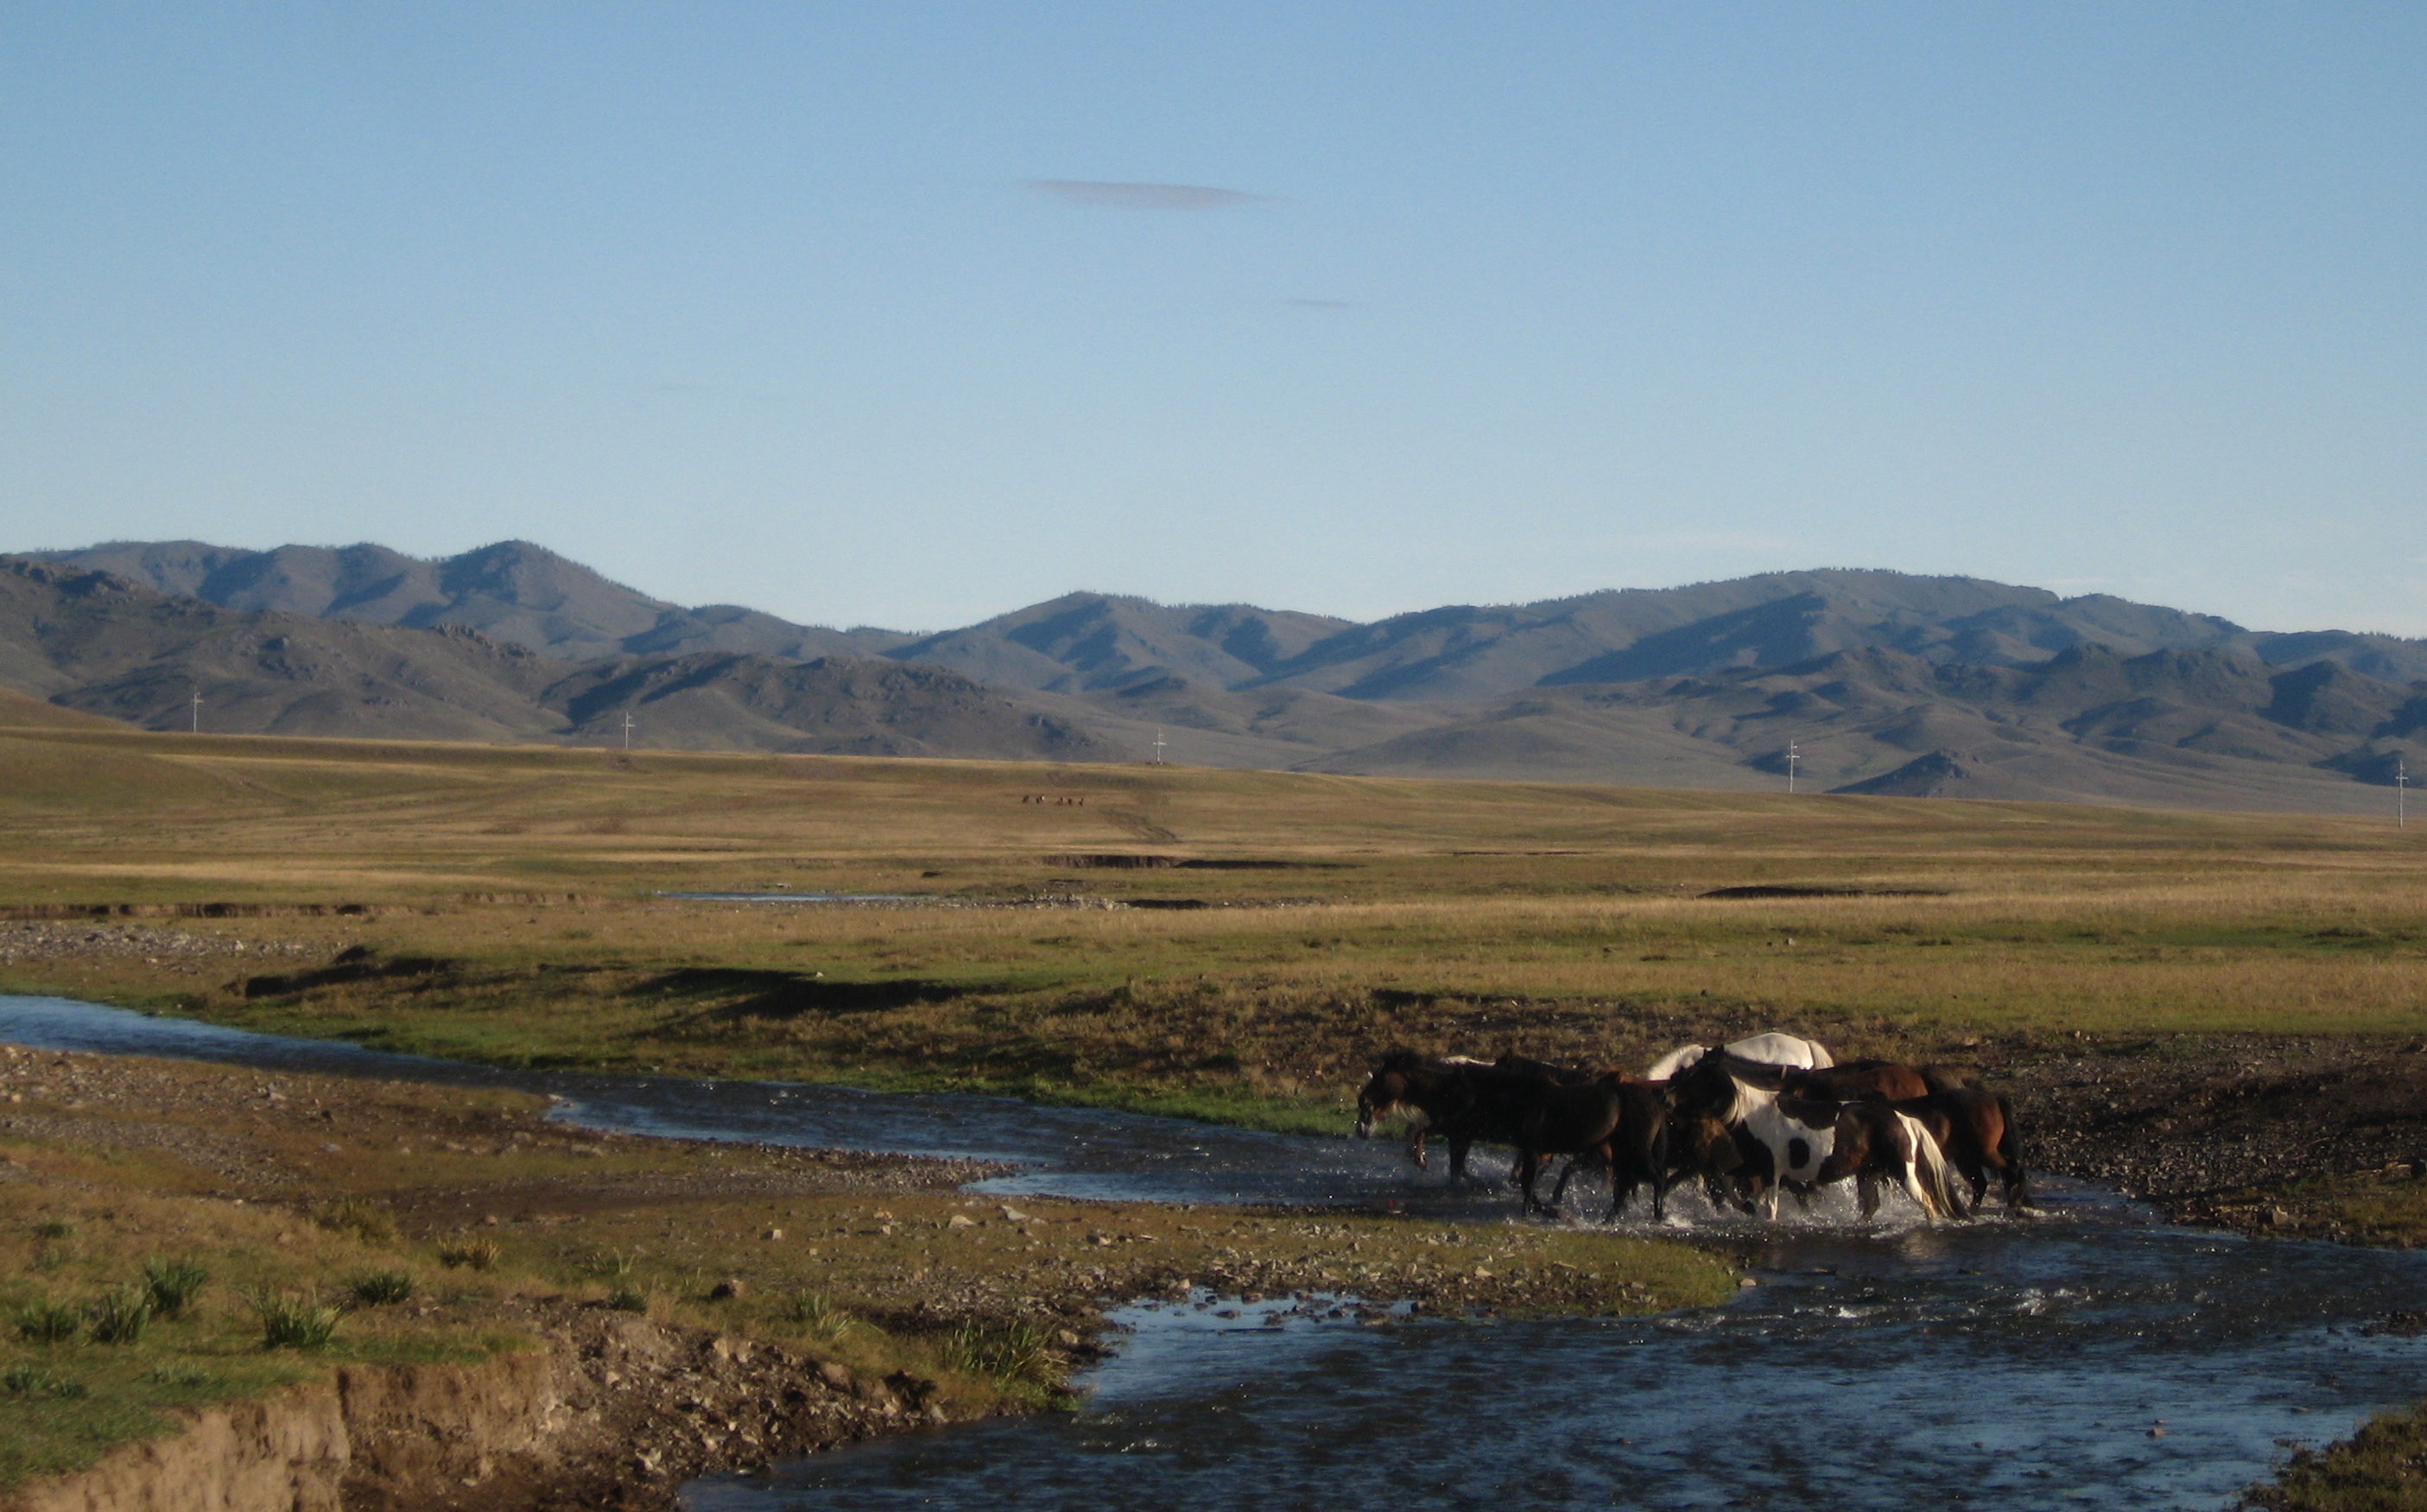 Horses crossing a river - Mongolia